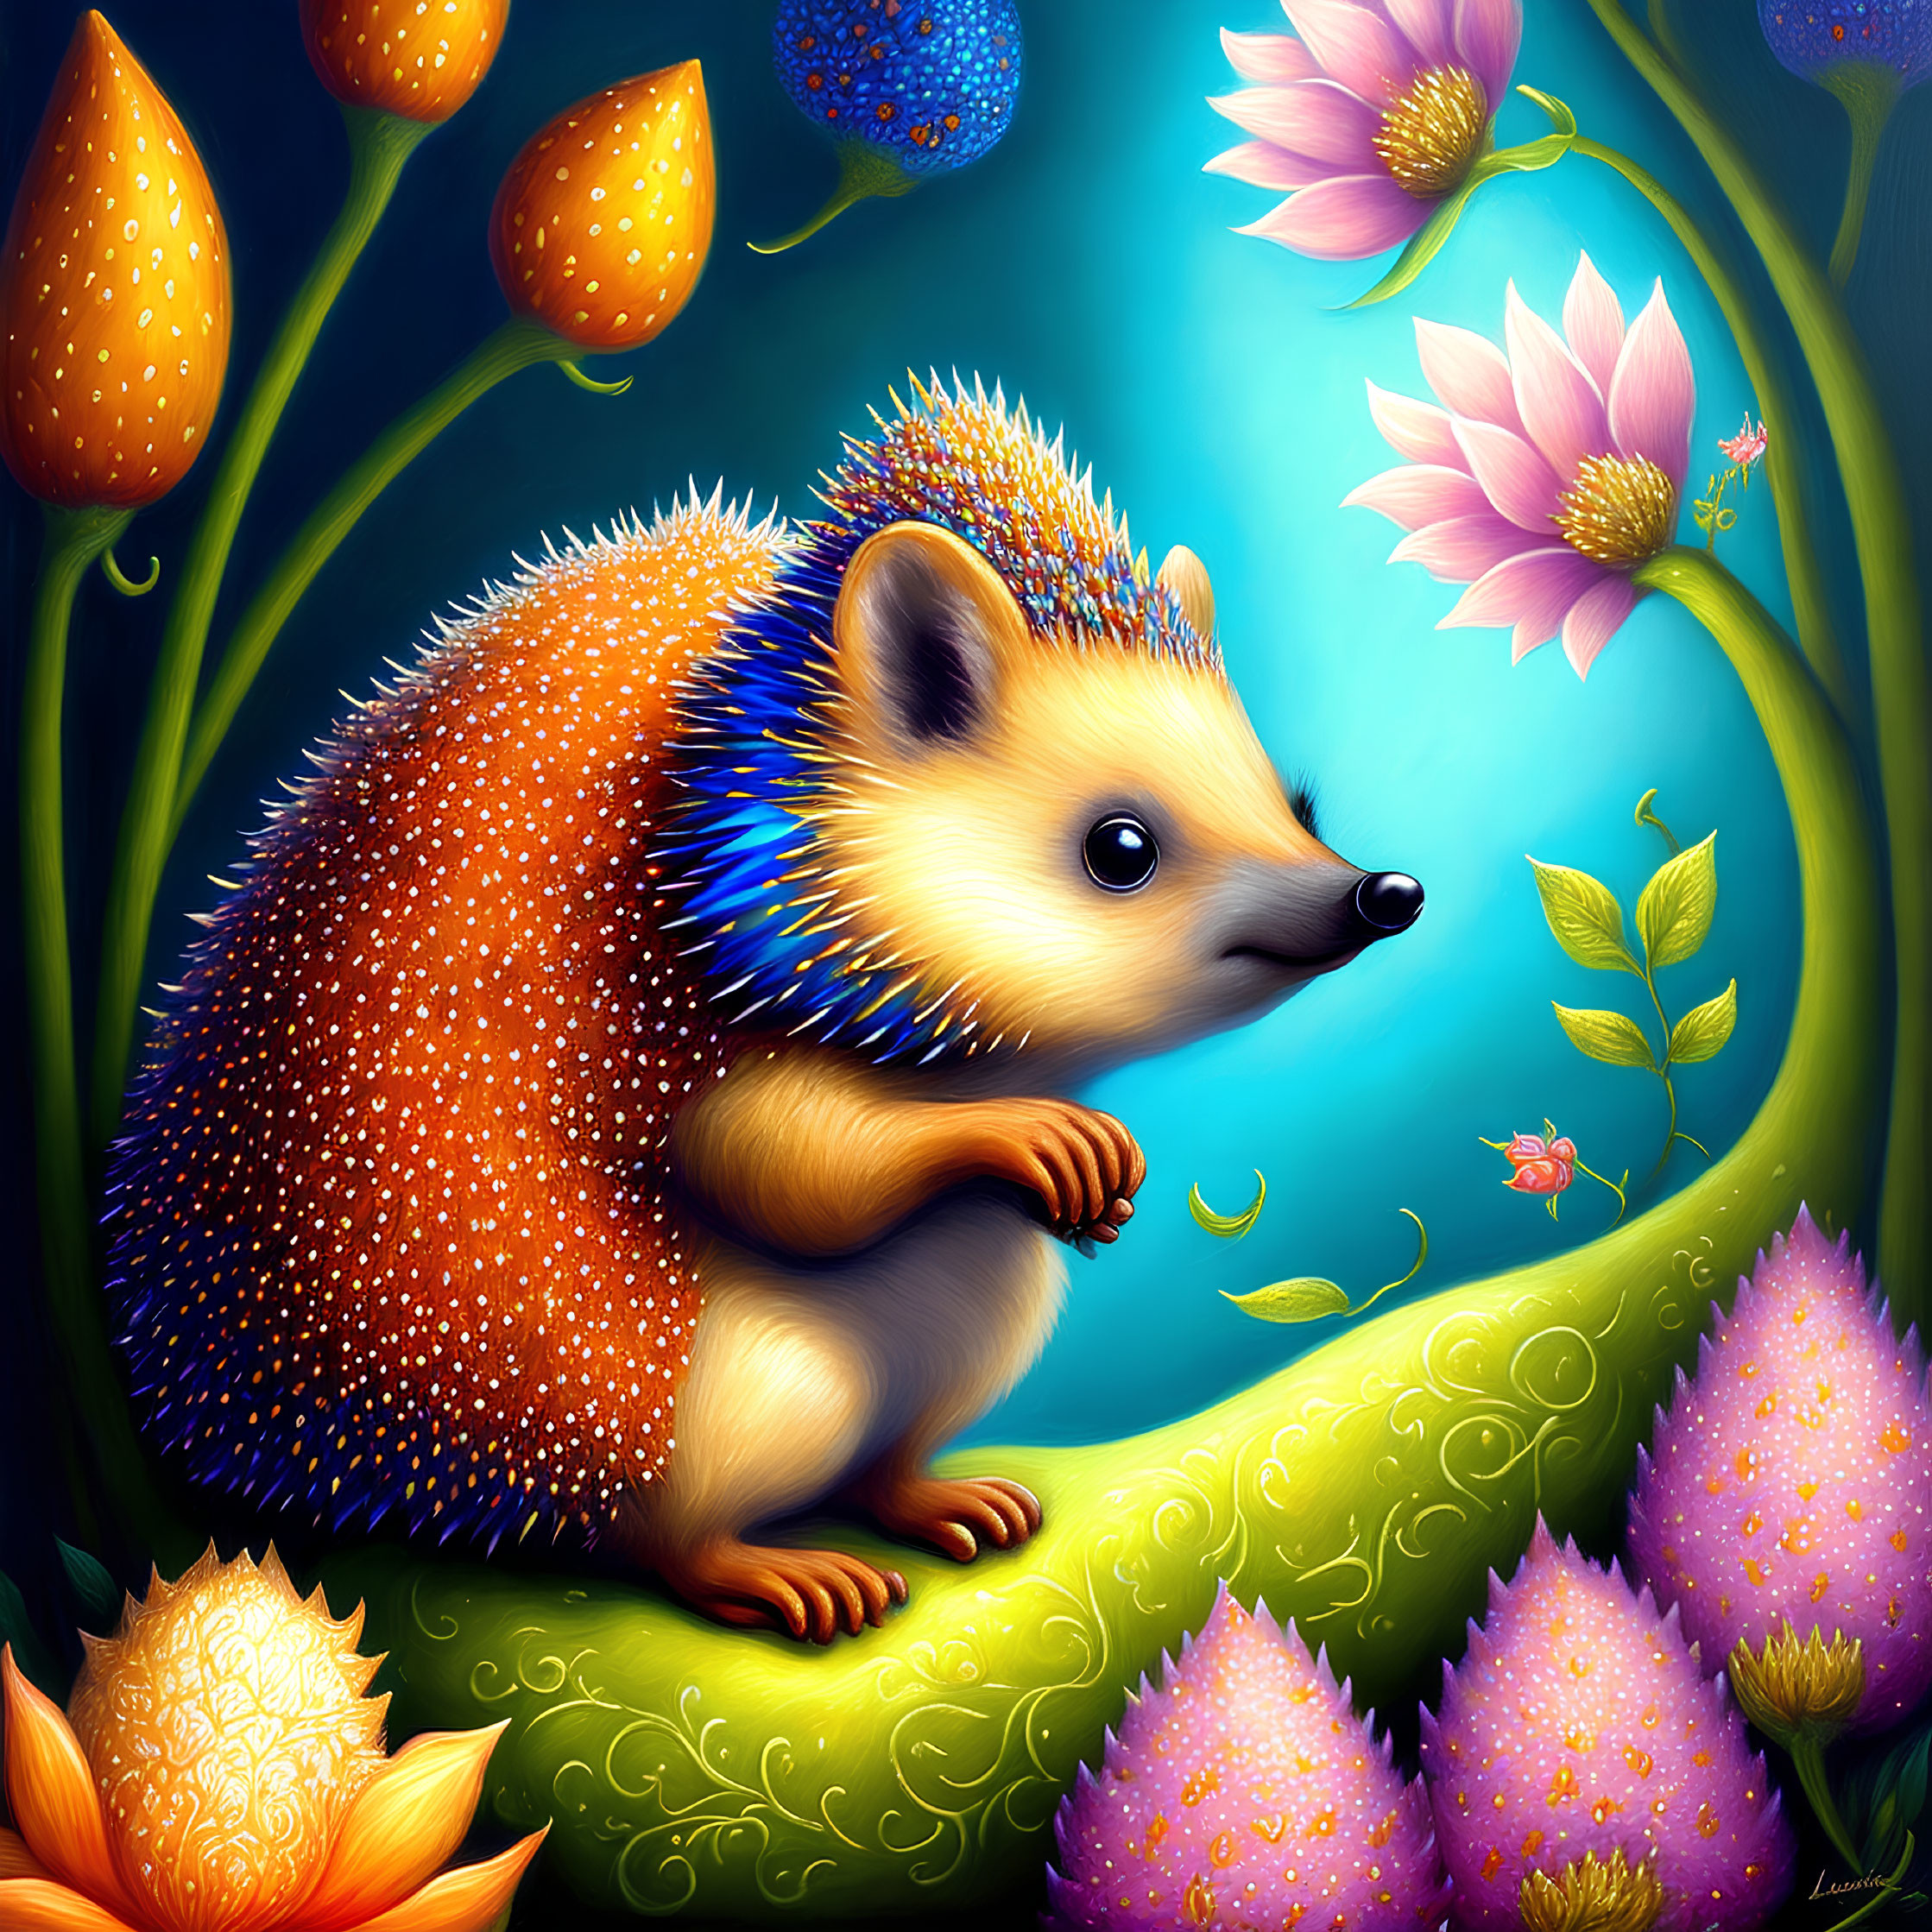 Colorful Hedgehog Among Vibrant Flowers and Foliage on Luminous Blue Background